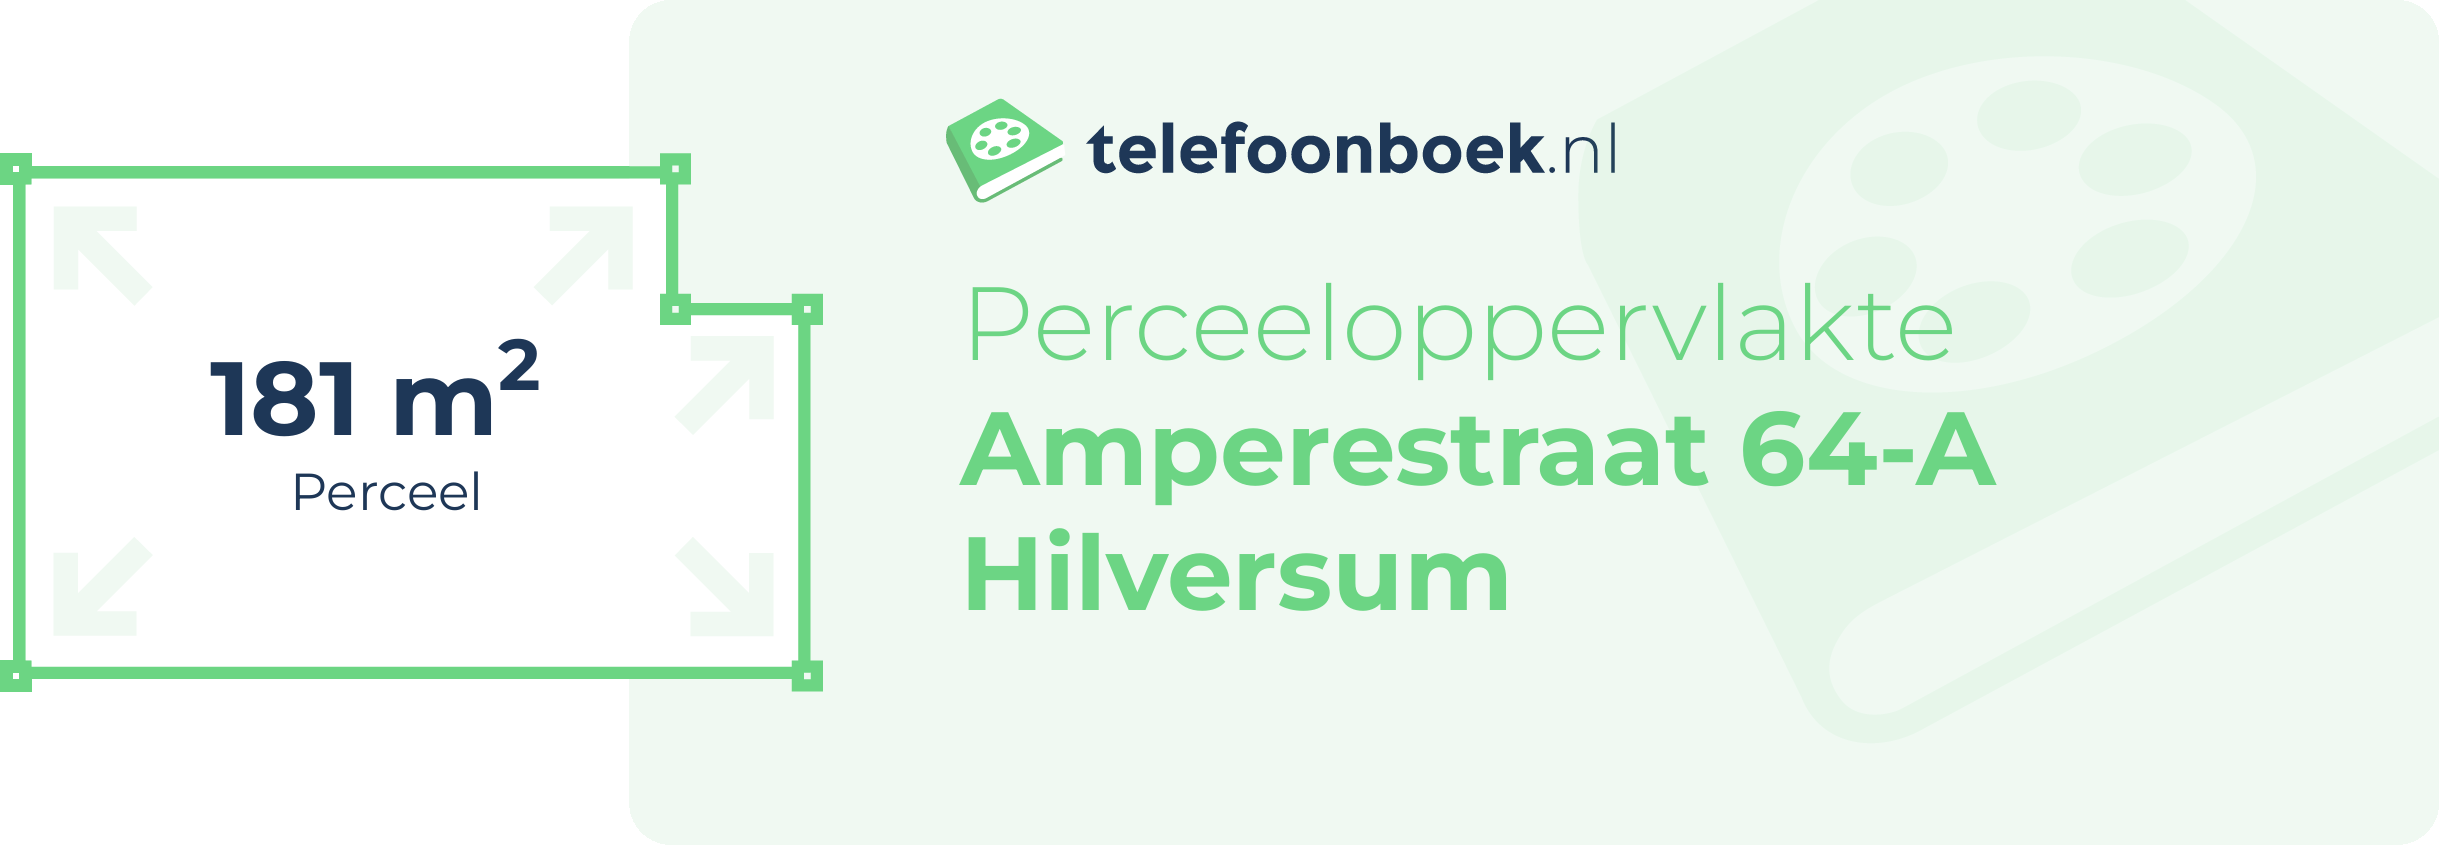 Perceeloppervlakte Amperestraat 64-A Hilversum